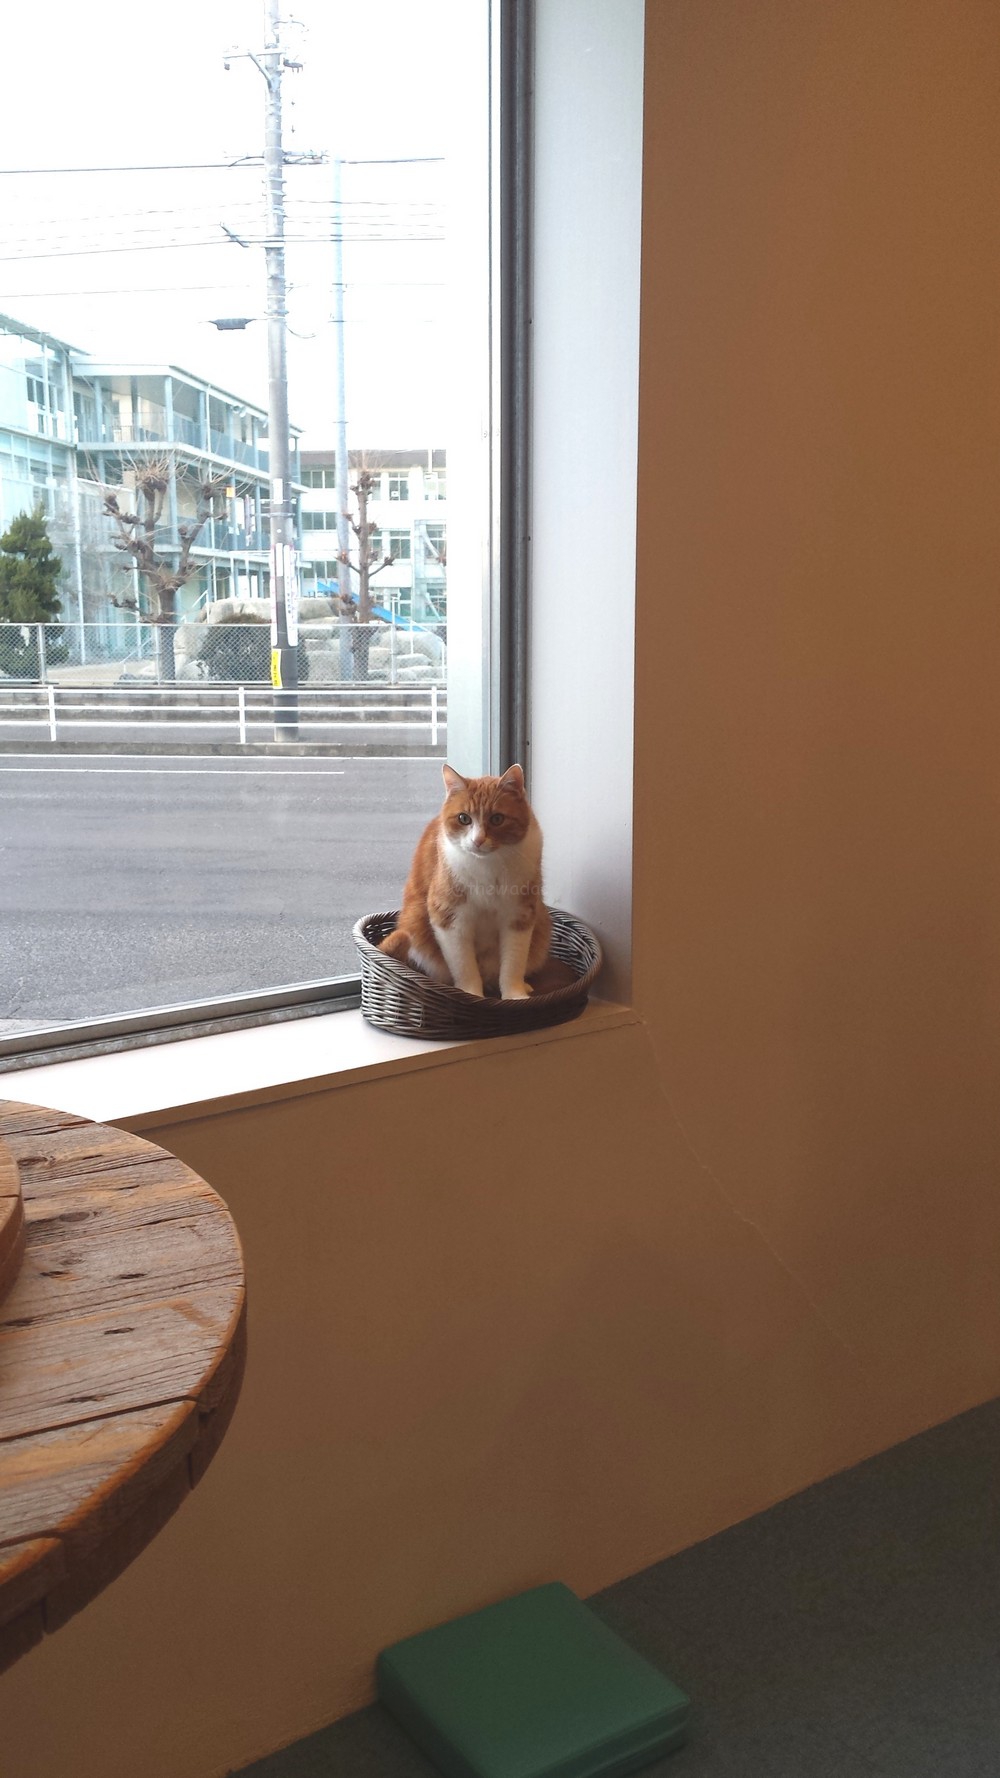 Blue Cat Cafe in Toiyacho